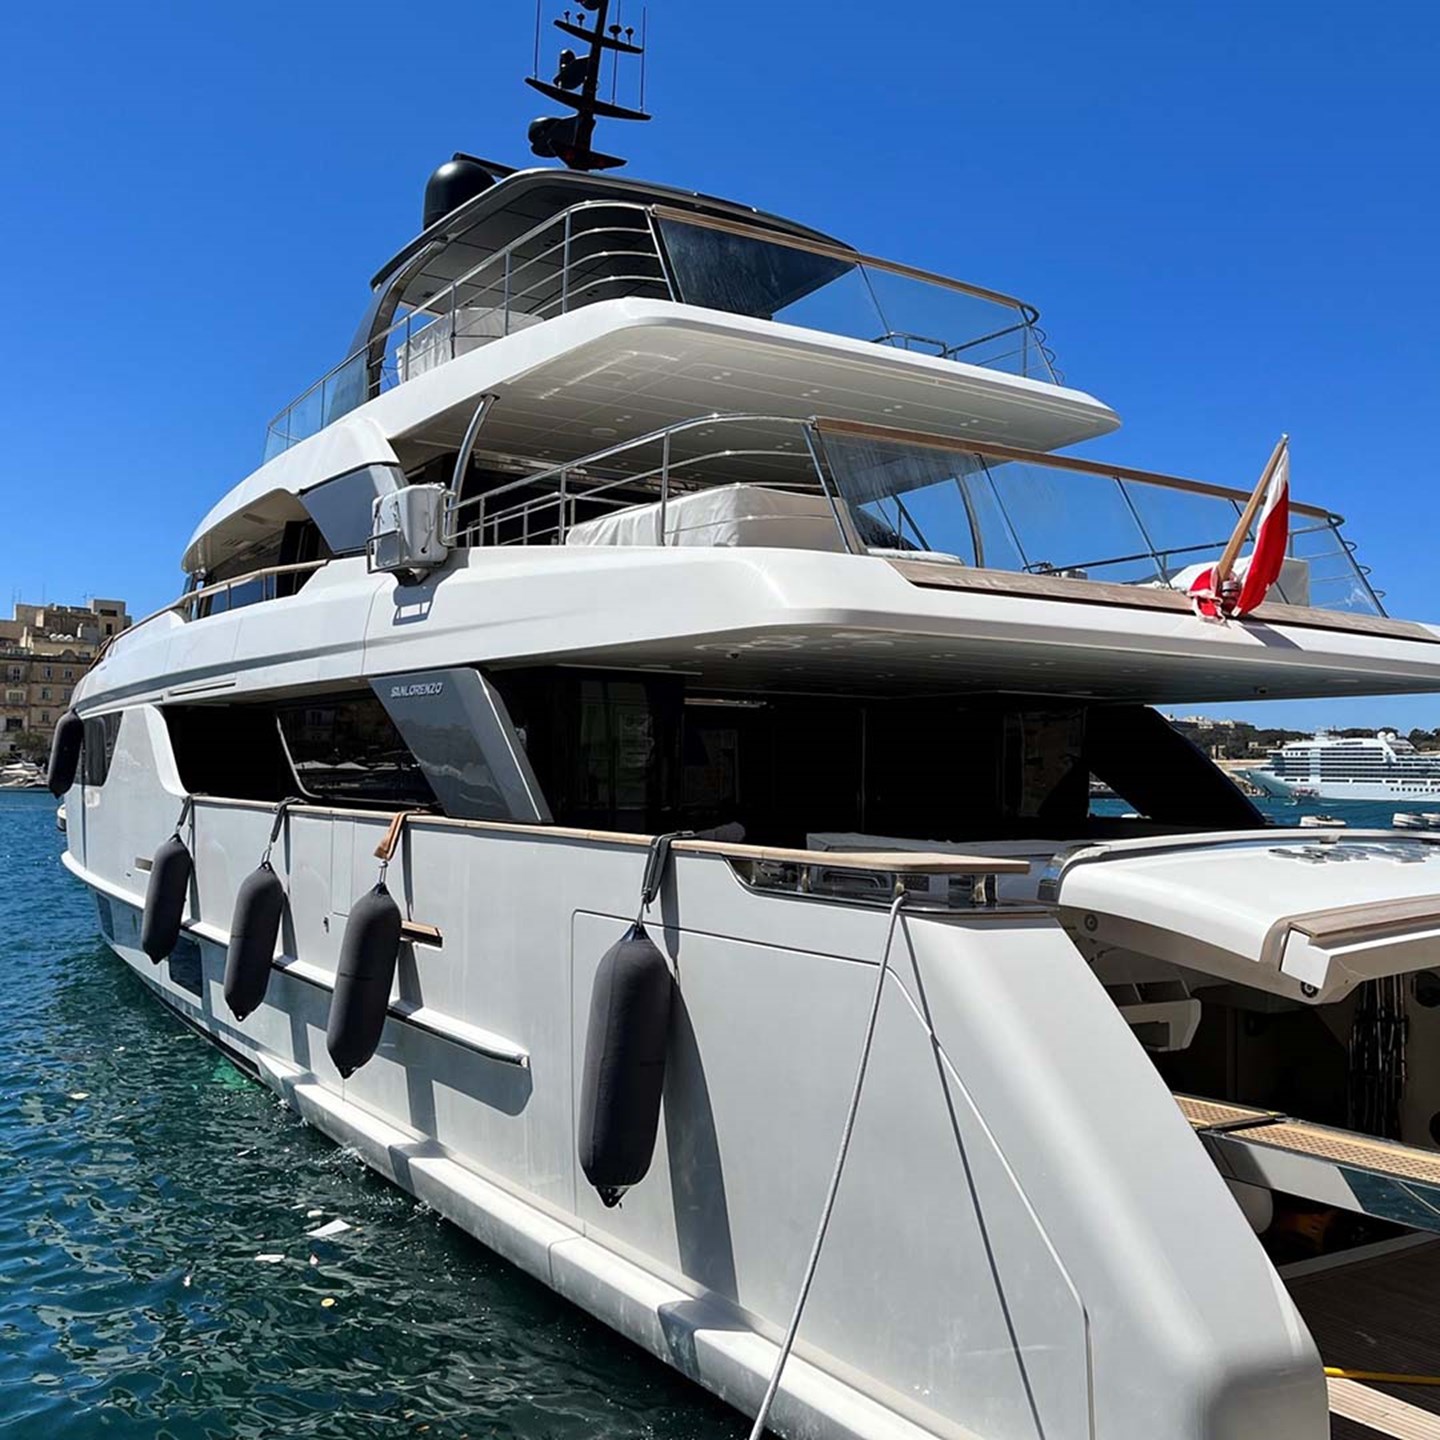 Malta-yacht-3-scaled.jpg